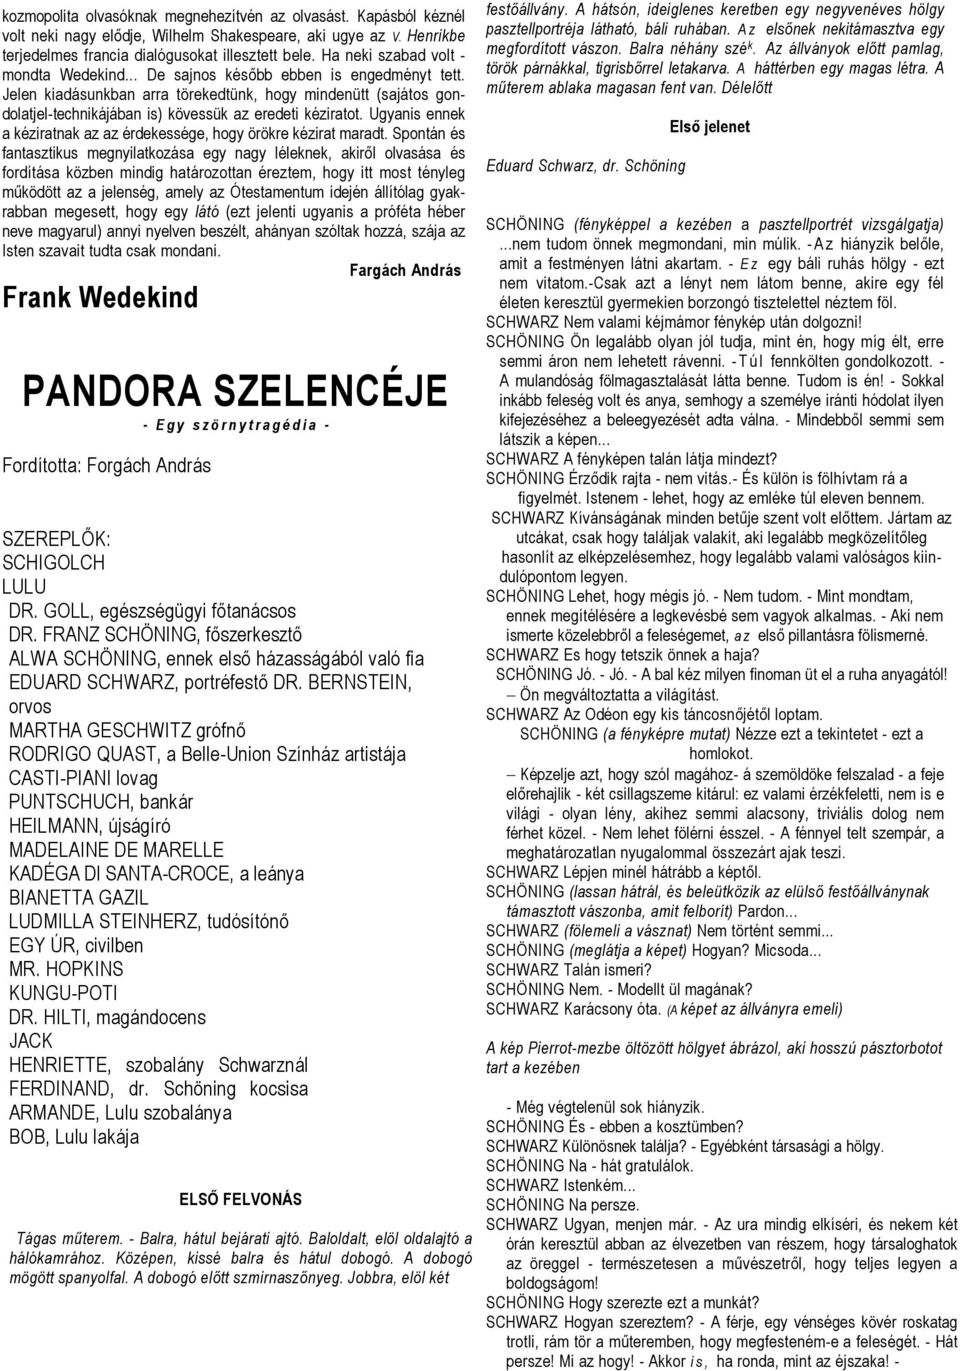 PANDORA SZELENCÉJE - E g y s z ö r n y t r a g é d i a - - PDF Free Download